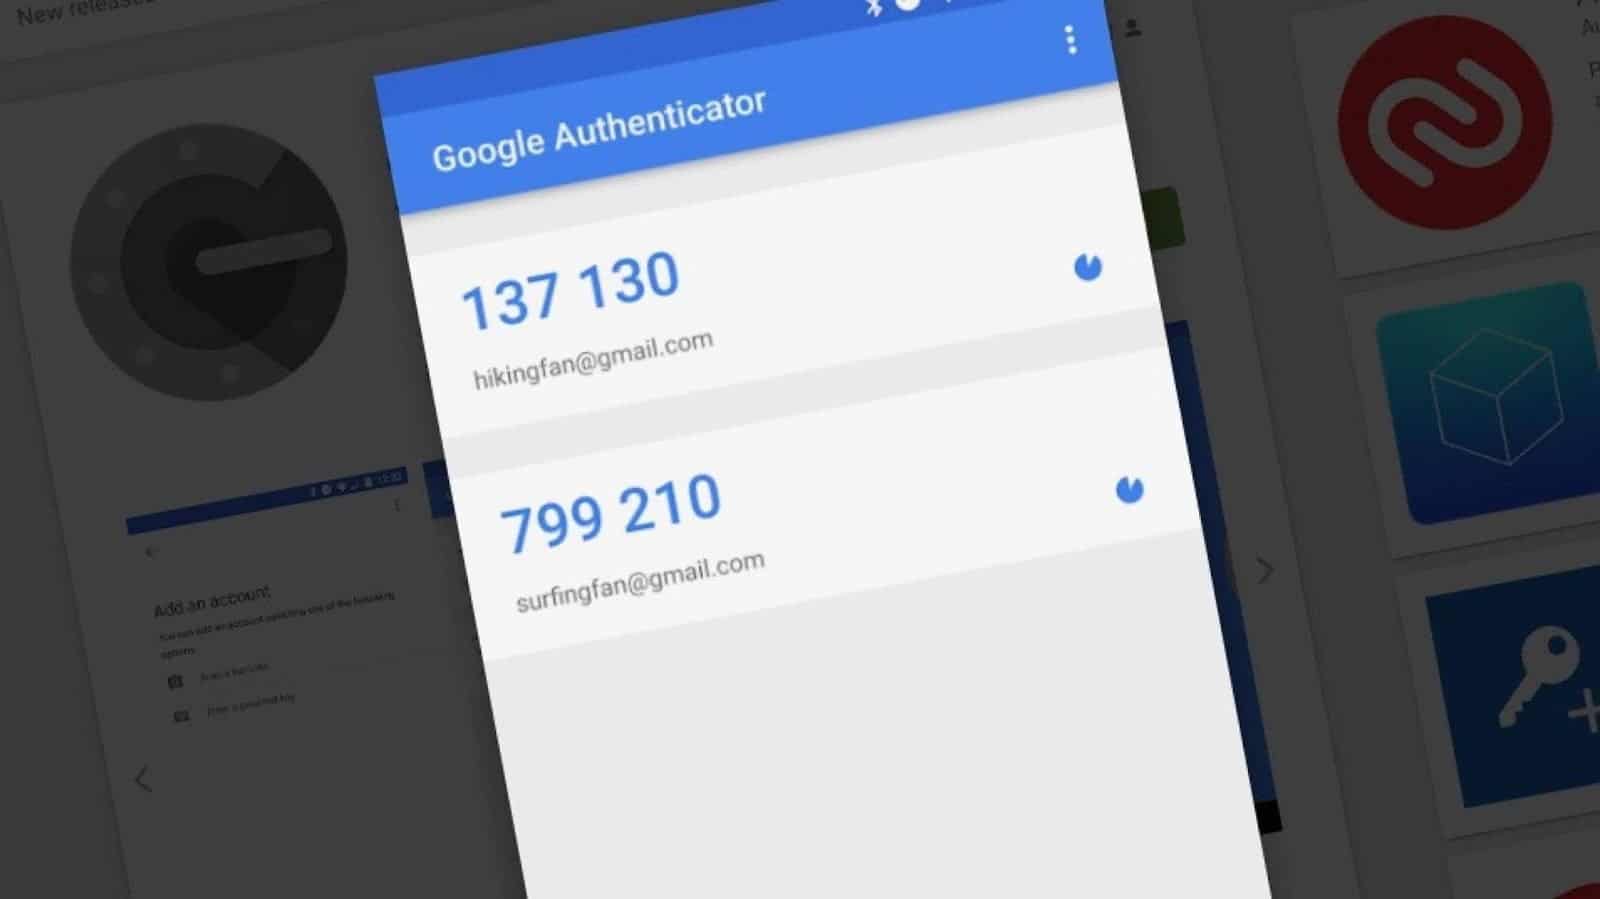 Google authenticator